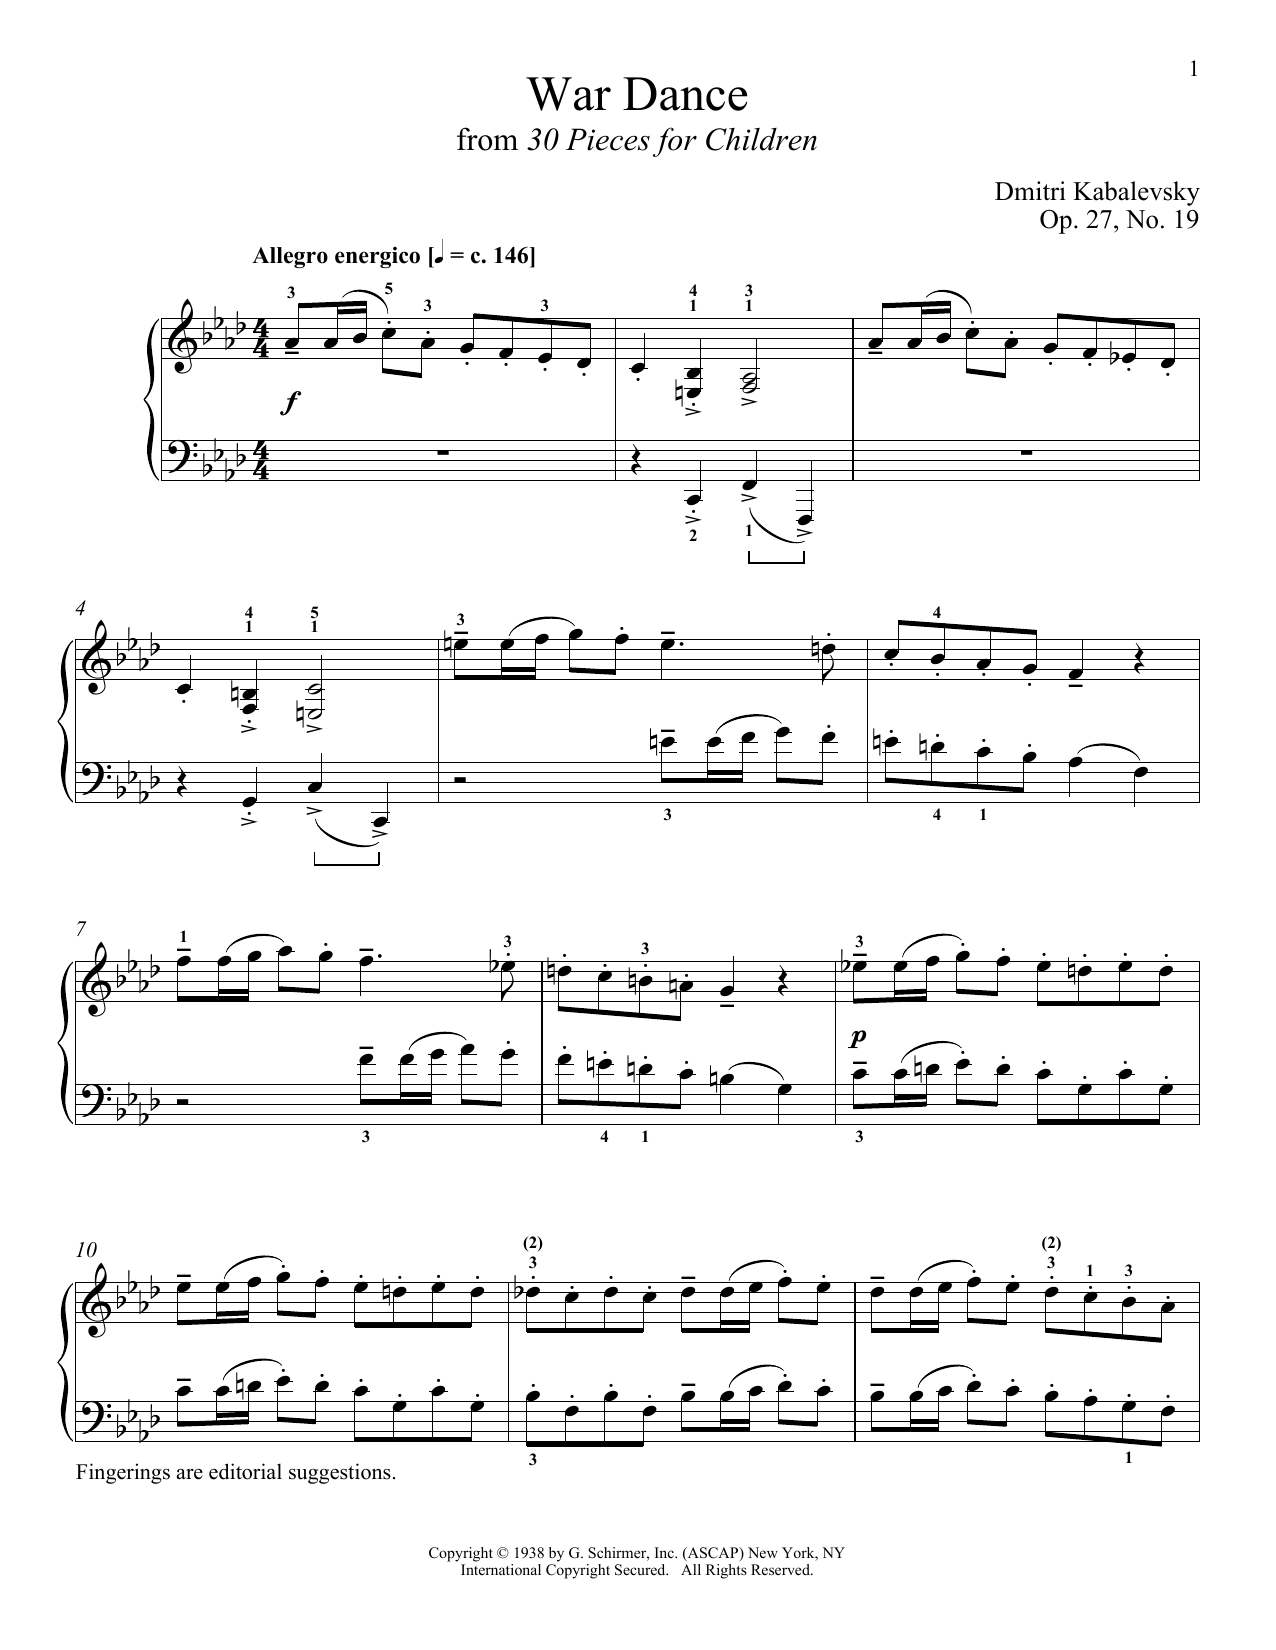 Dmitri Kabalevsky War Dance Sheet Music Notes & Chords for Piano - Download or Print PDF